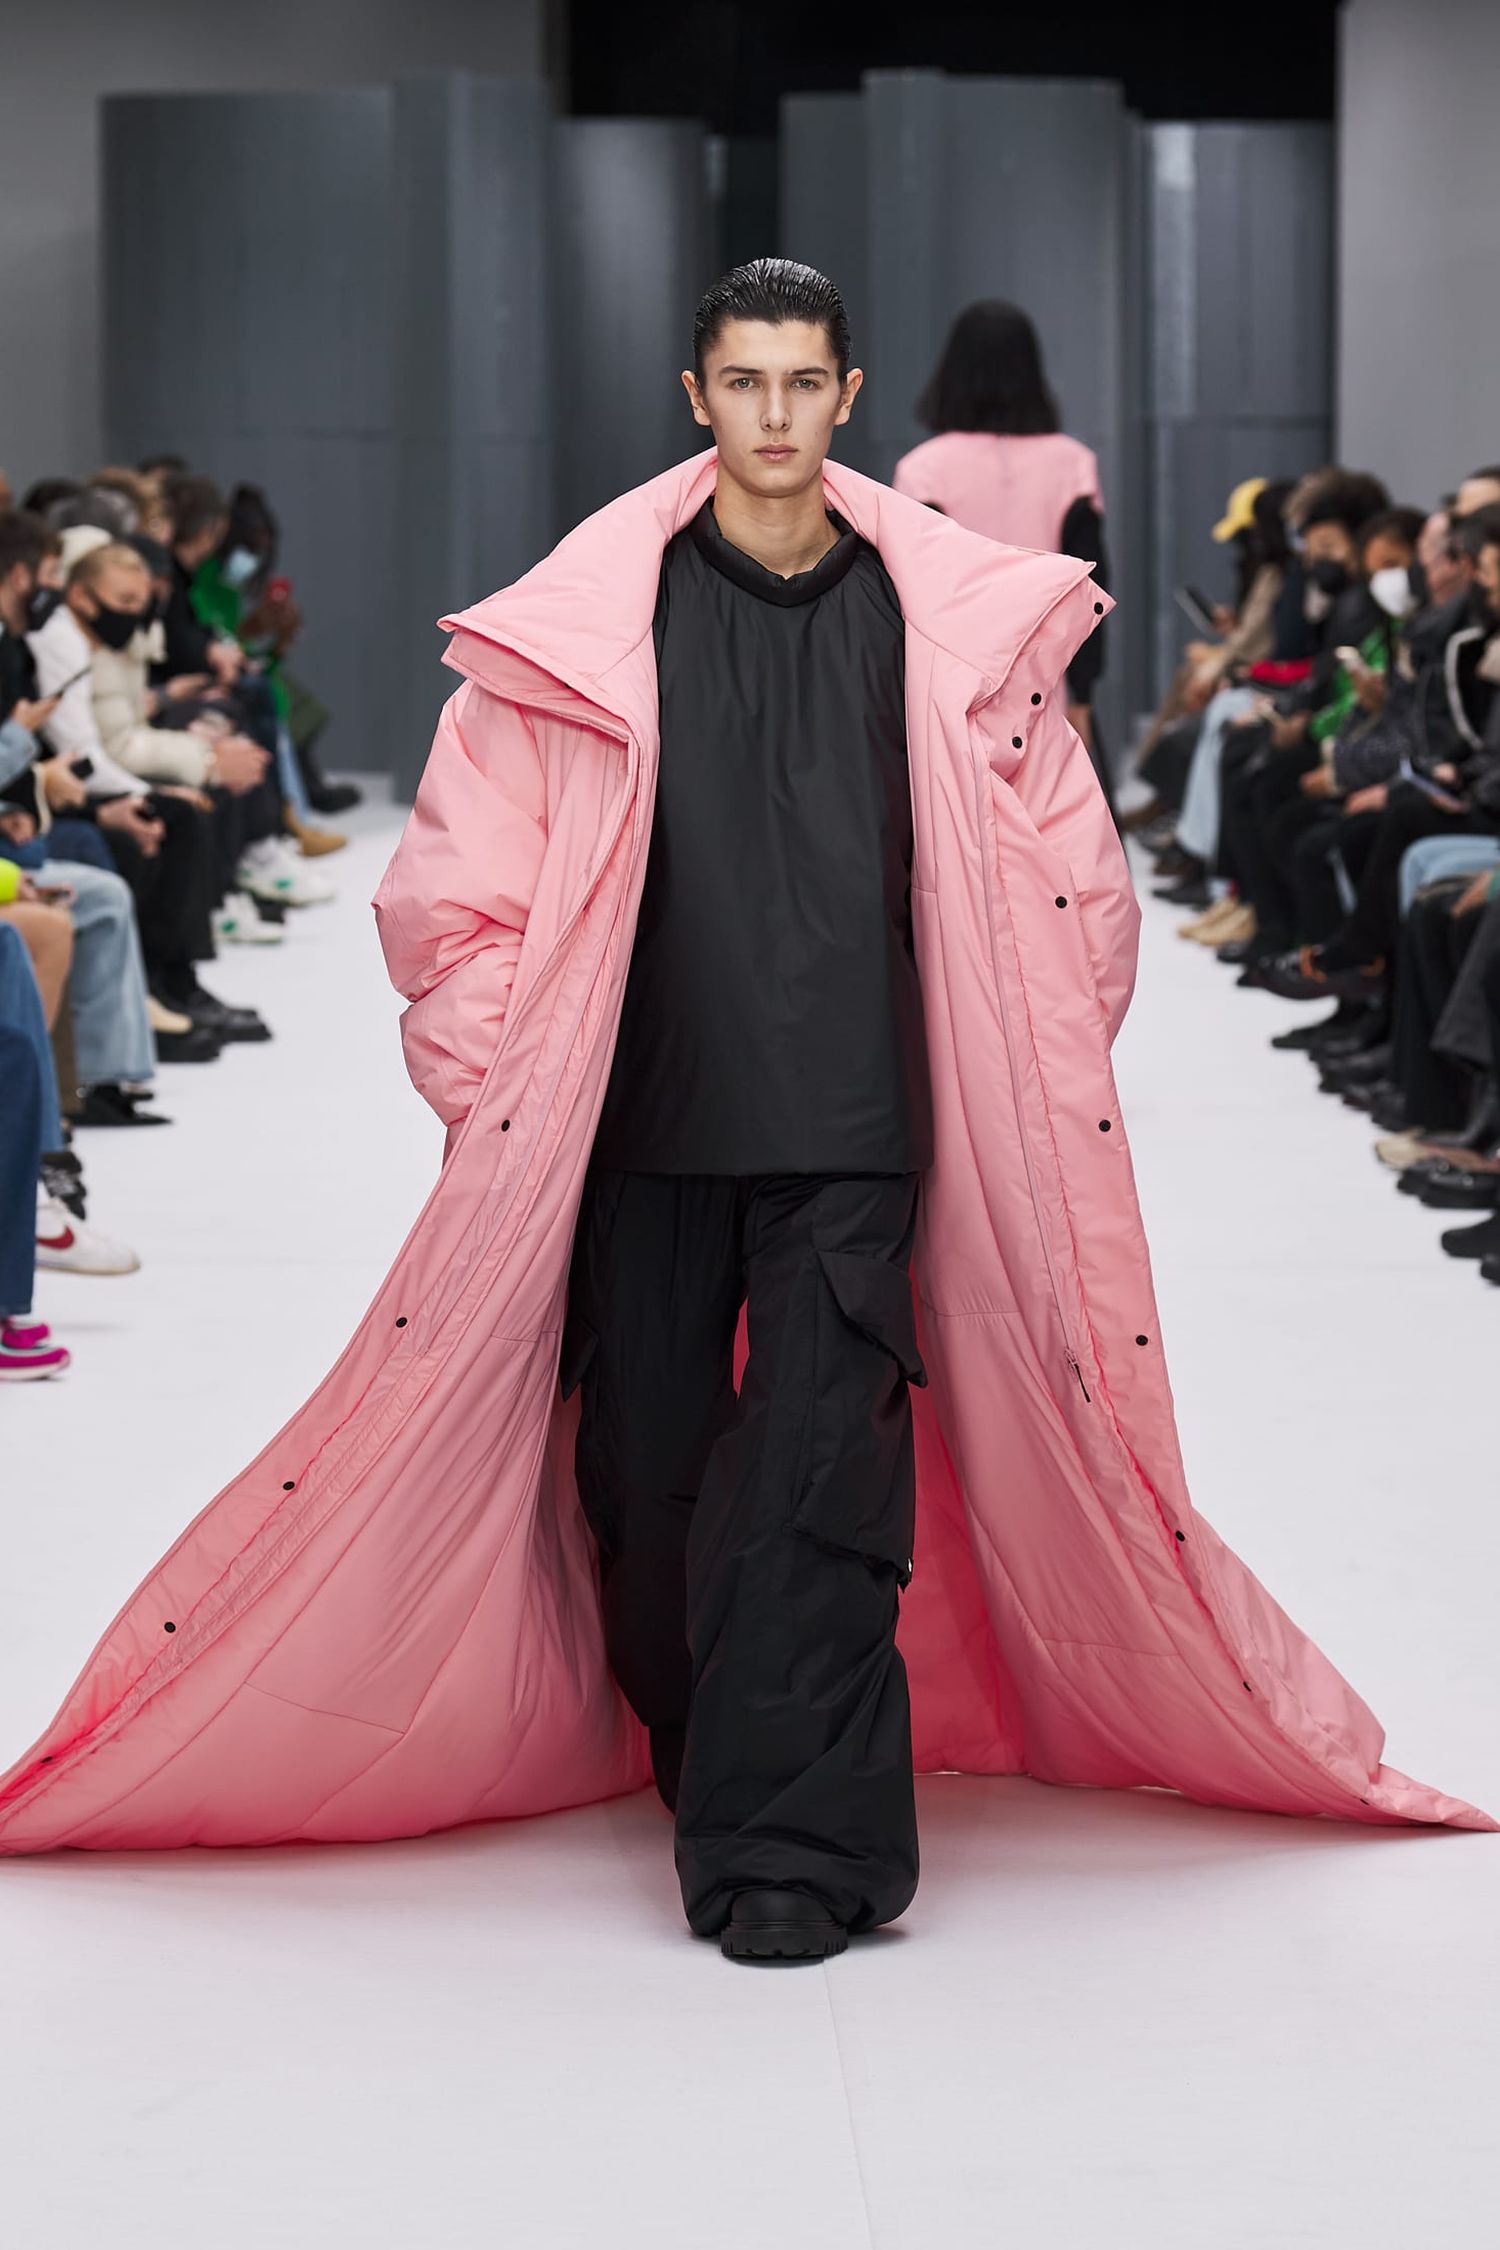 Prince Nikolai of Denmark closes Rains' first Paris Men's Fashion Week show  - Vogue Scandinavia